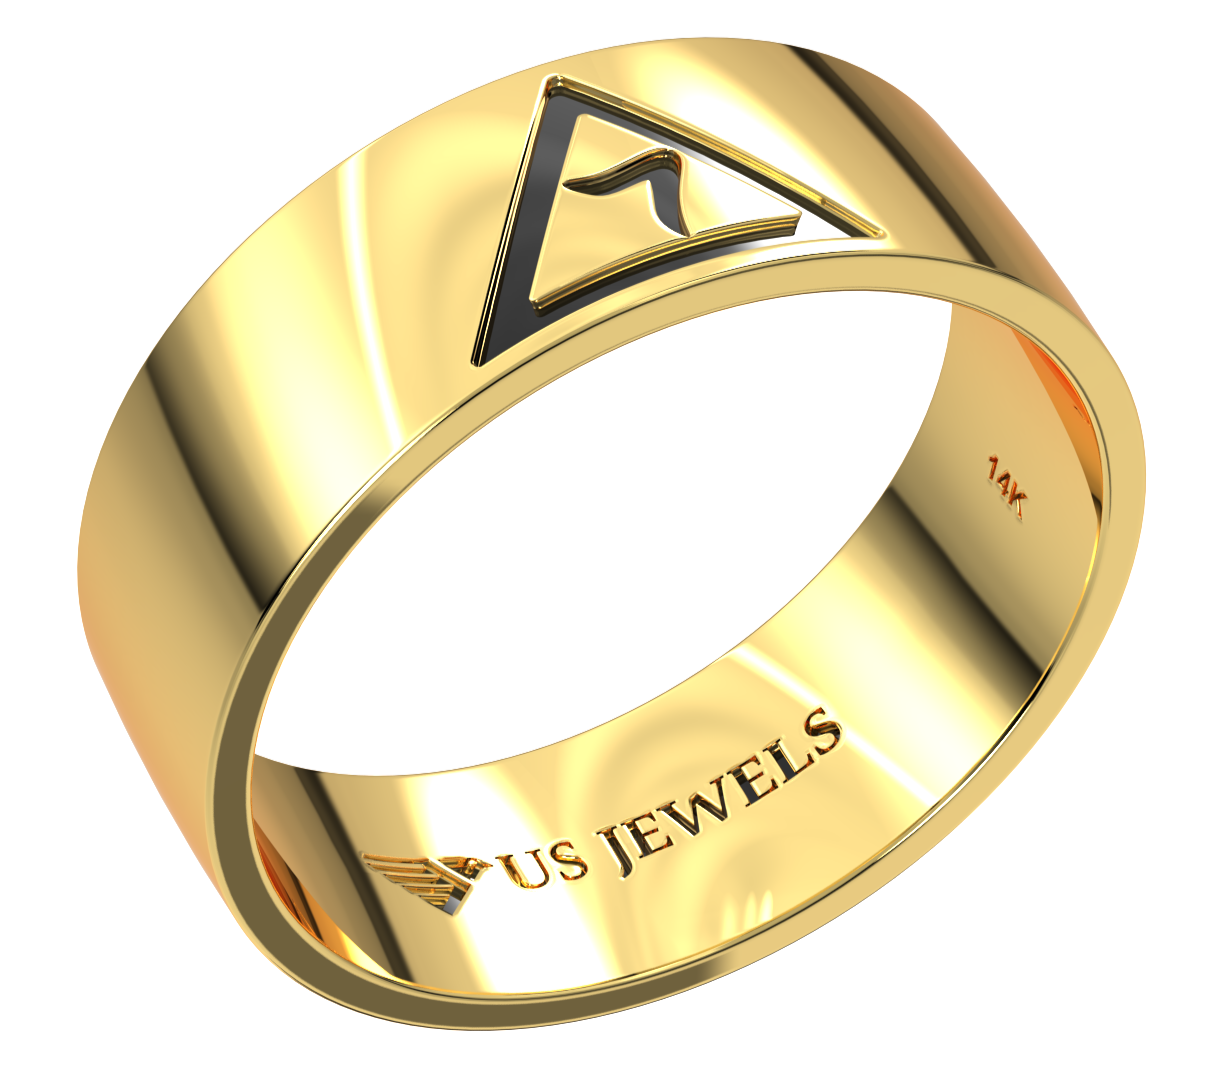 Customizable 14k White or Yellow Gold Scottish Rite 14th Degree Yod Masonic Ring